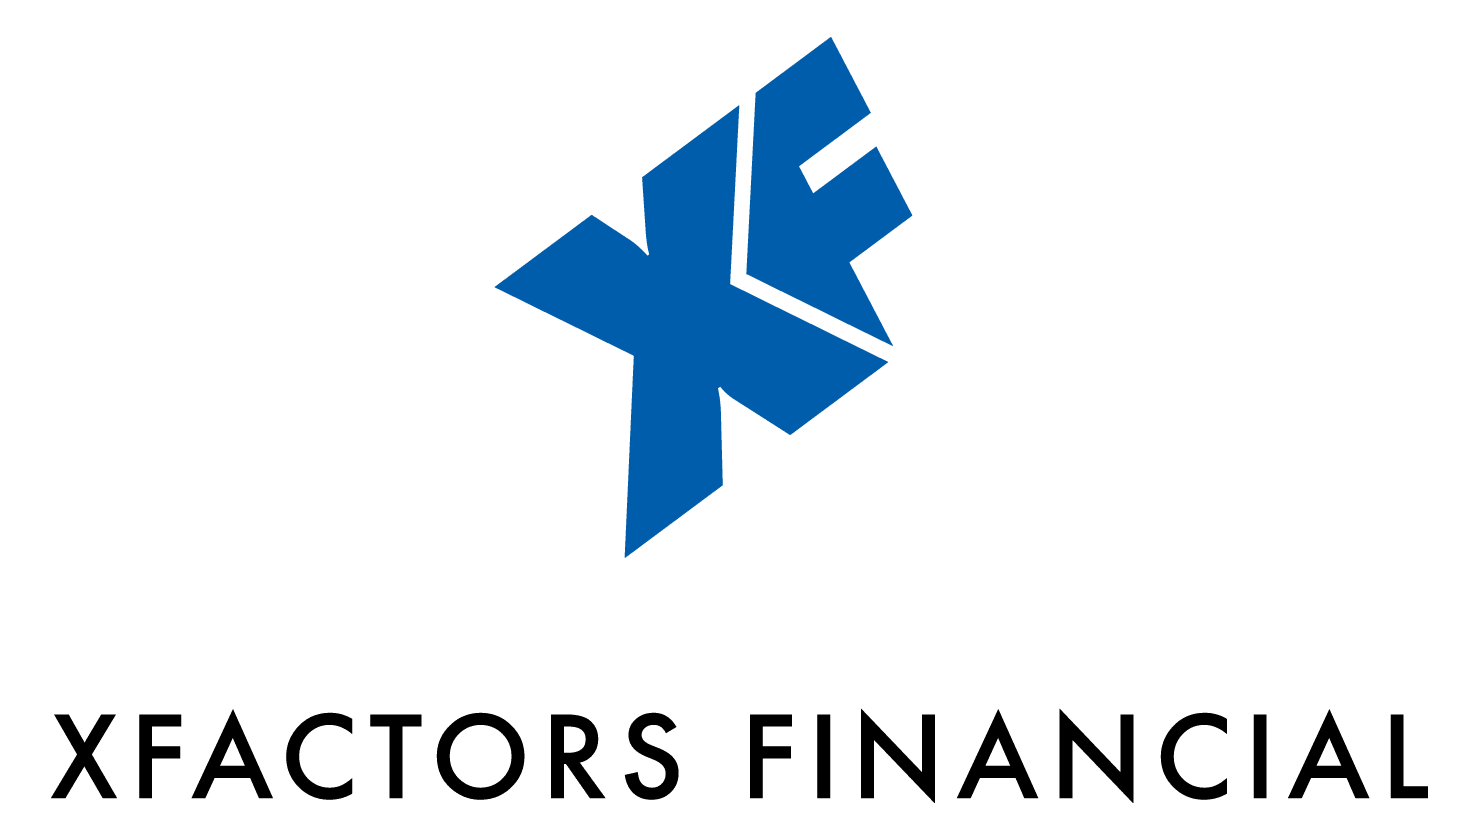 XFACTORS FINANCIAL